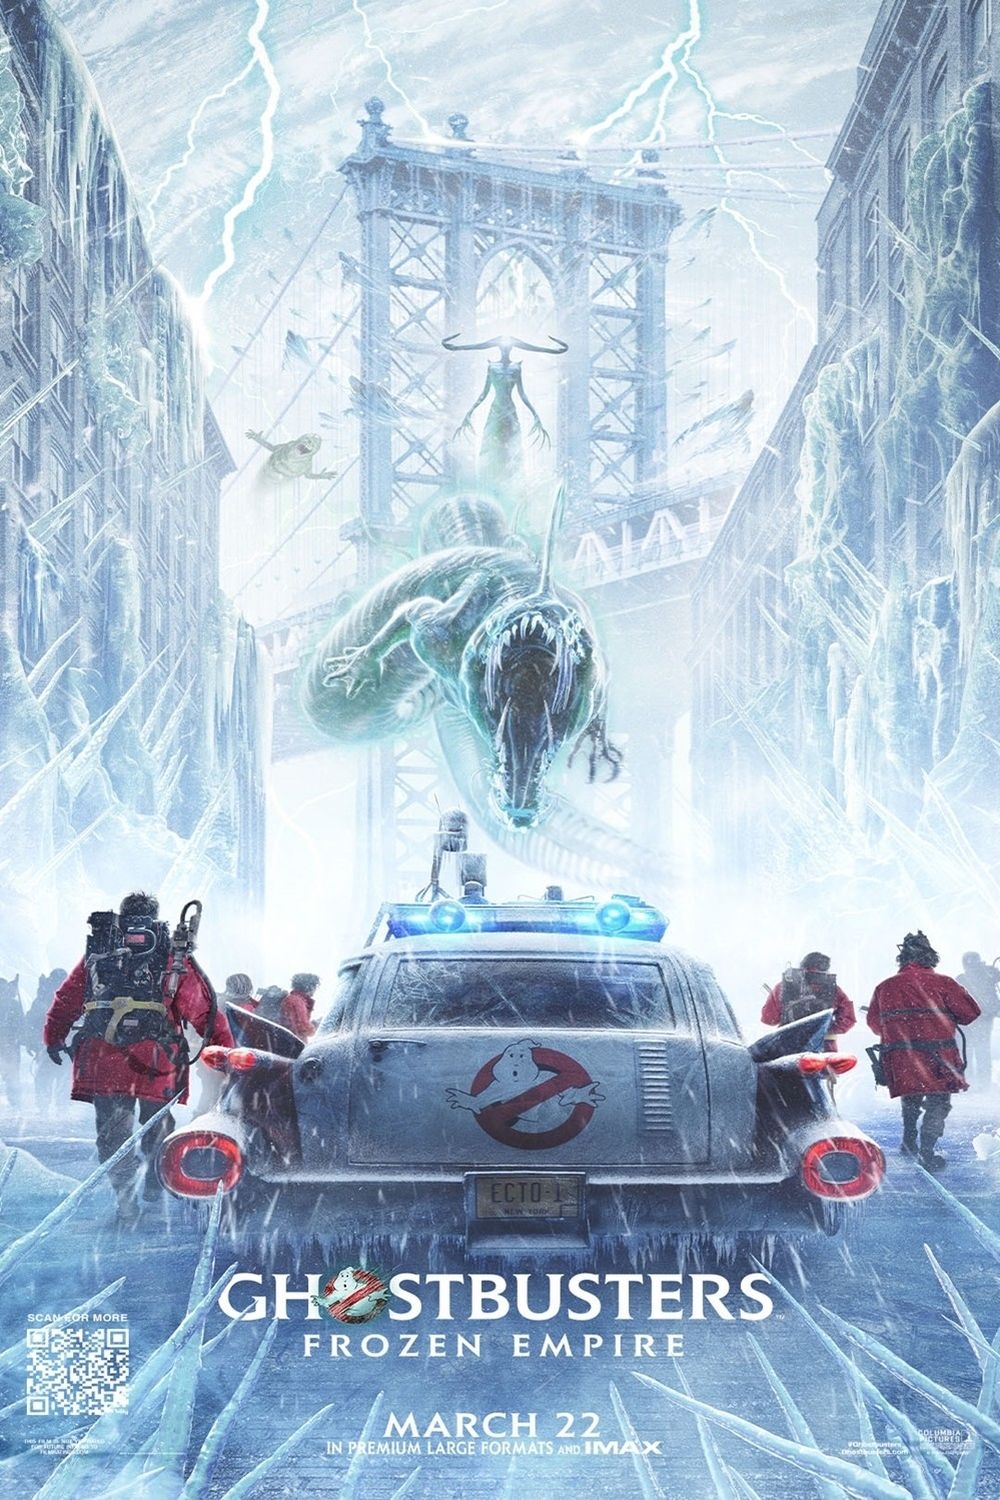 Still of Ghostbusters: Frozen Empire